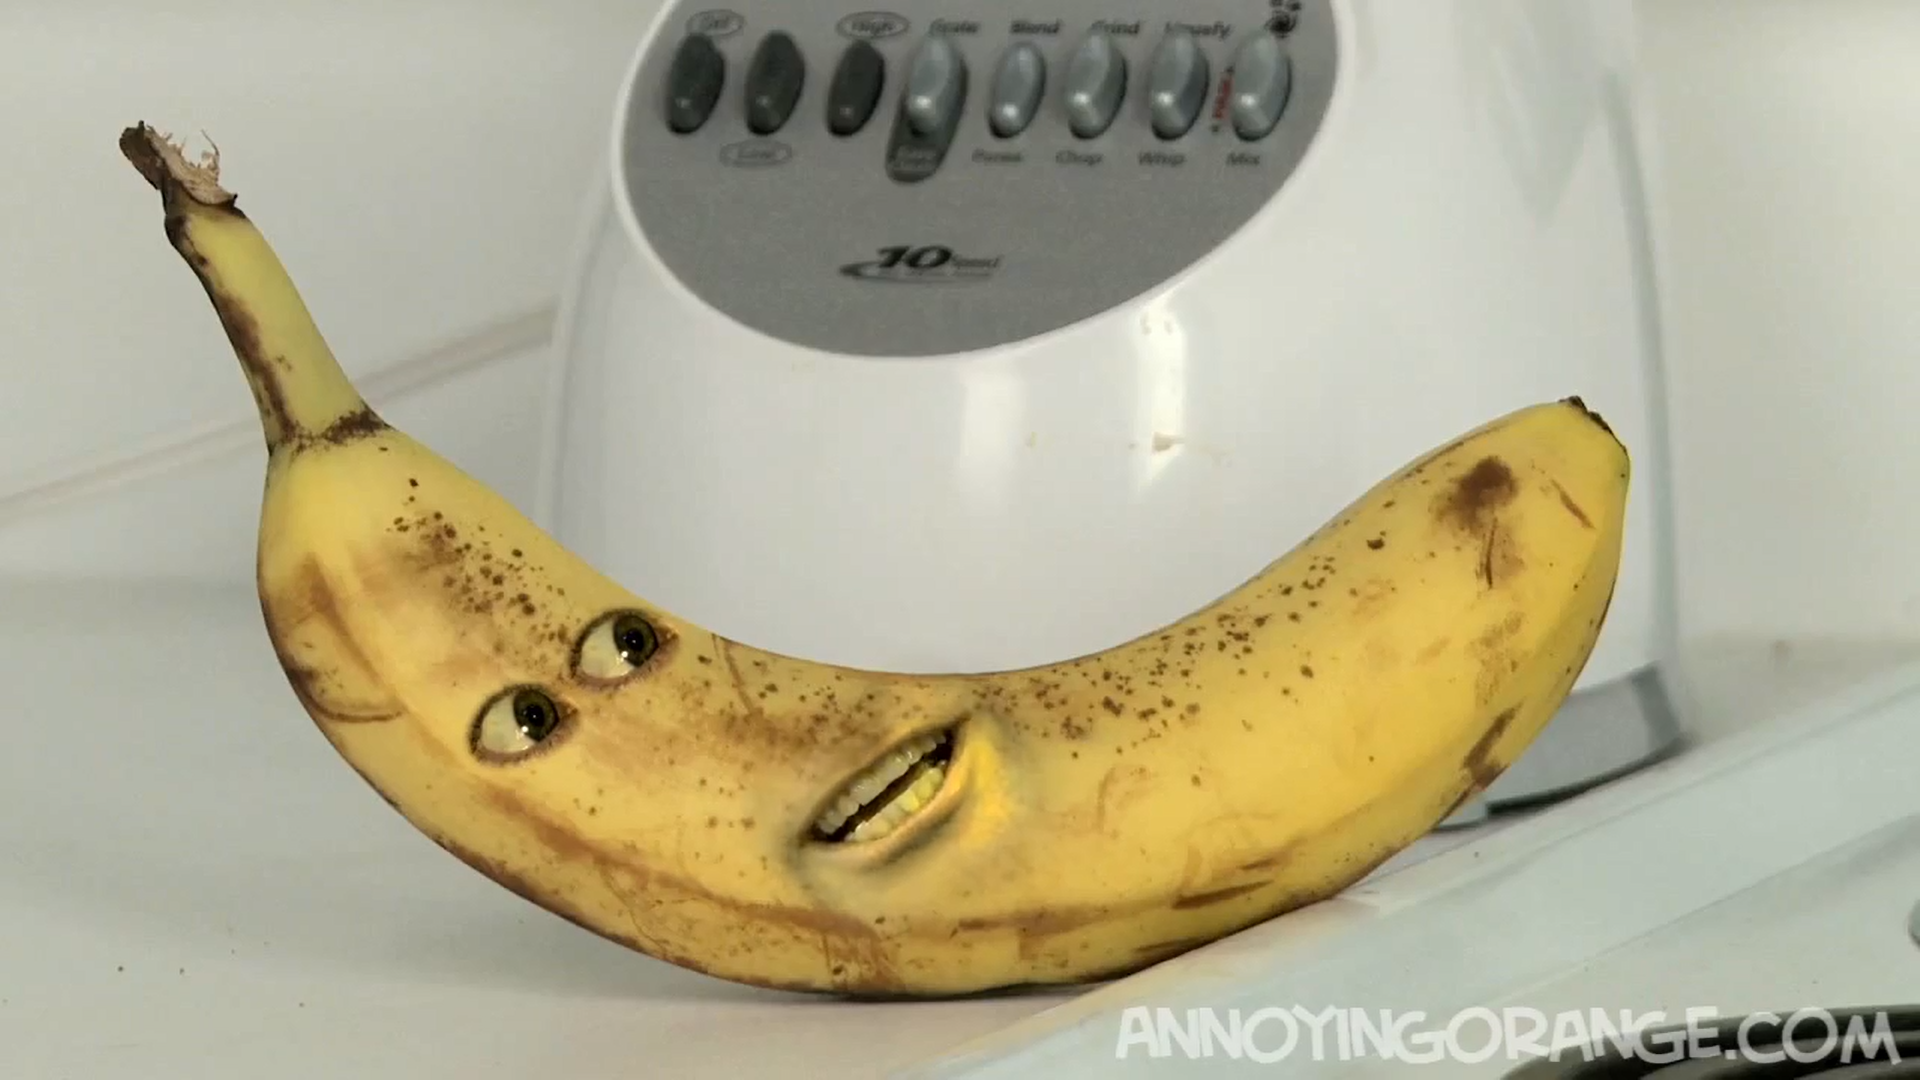 Annoying orange banana